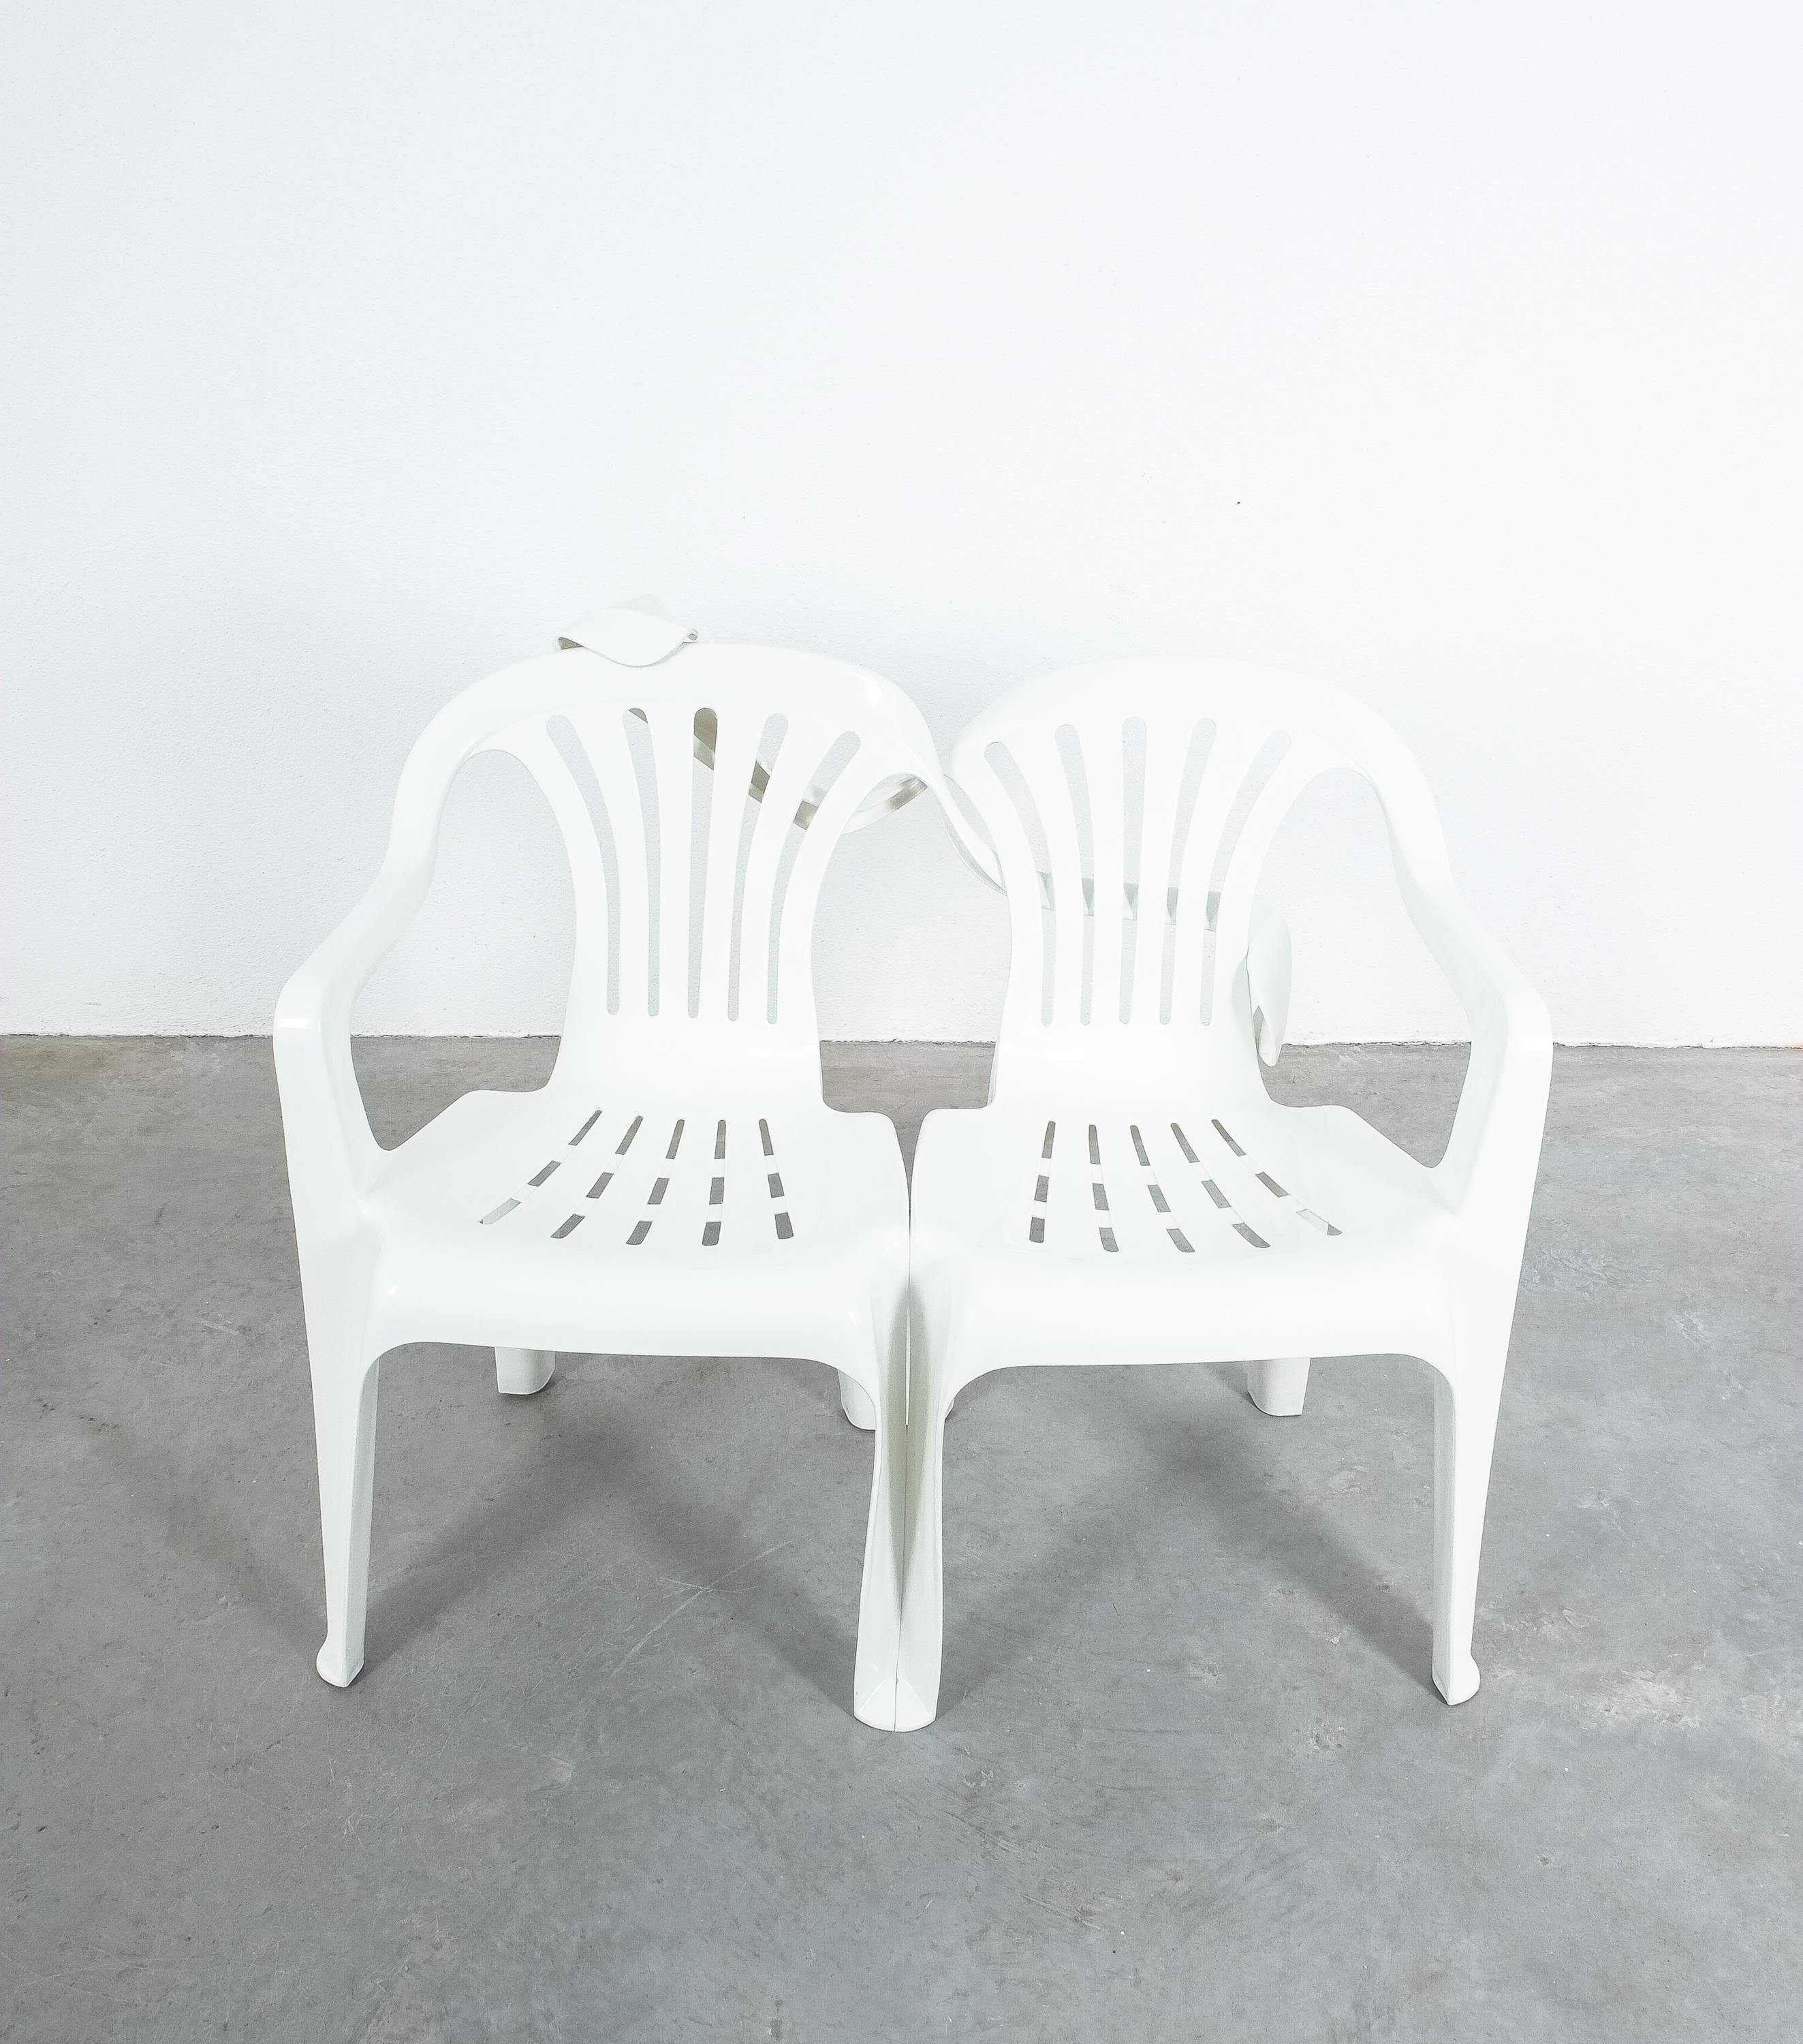 Austrian Dudes Plastic Chair Appropriation by Bert Loeschner